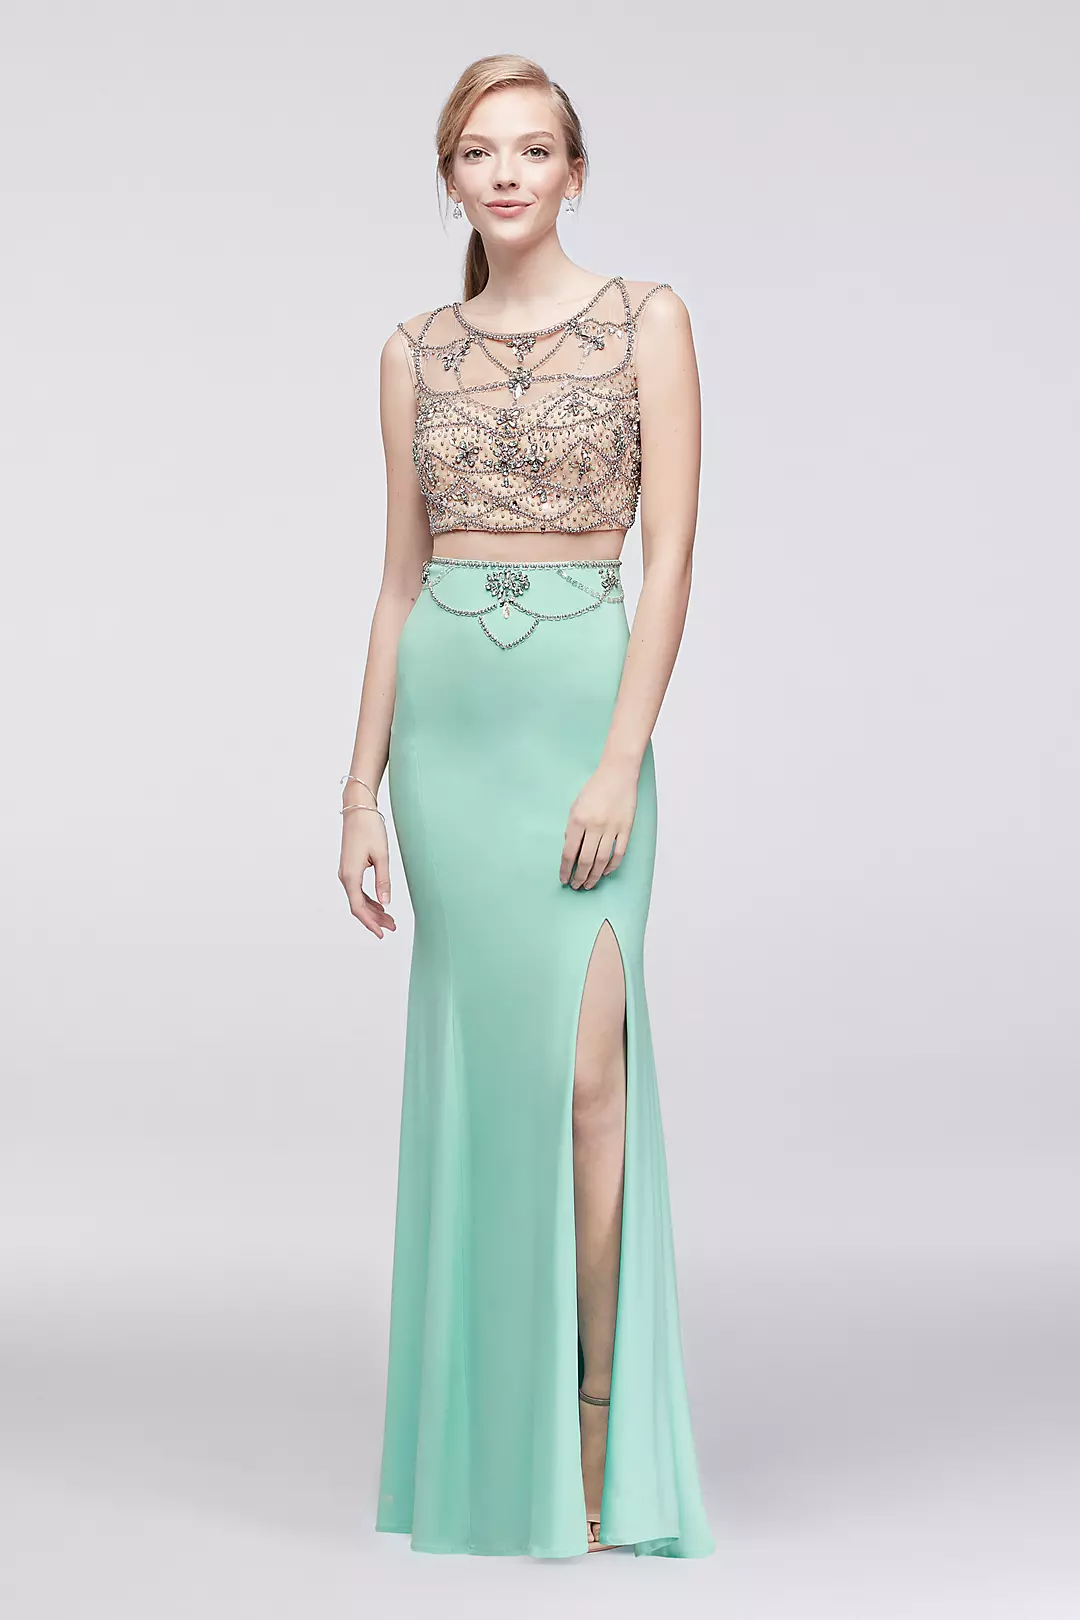 Beaded Bodice Mermaid Dress with Slit Skirt Image